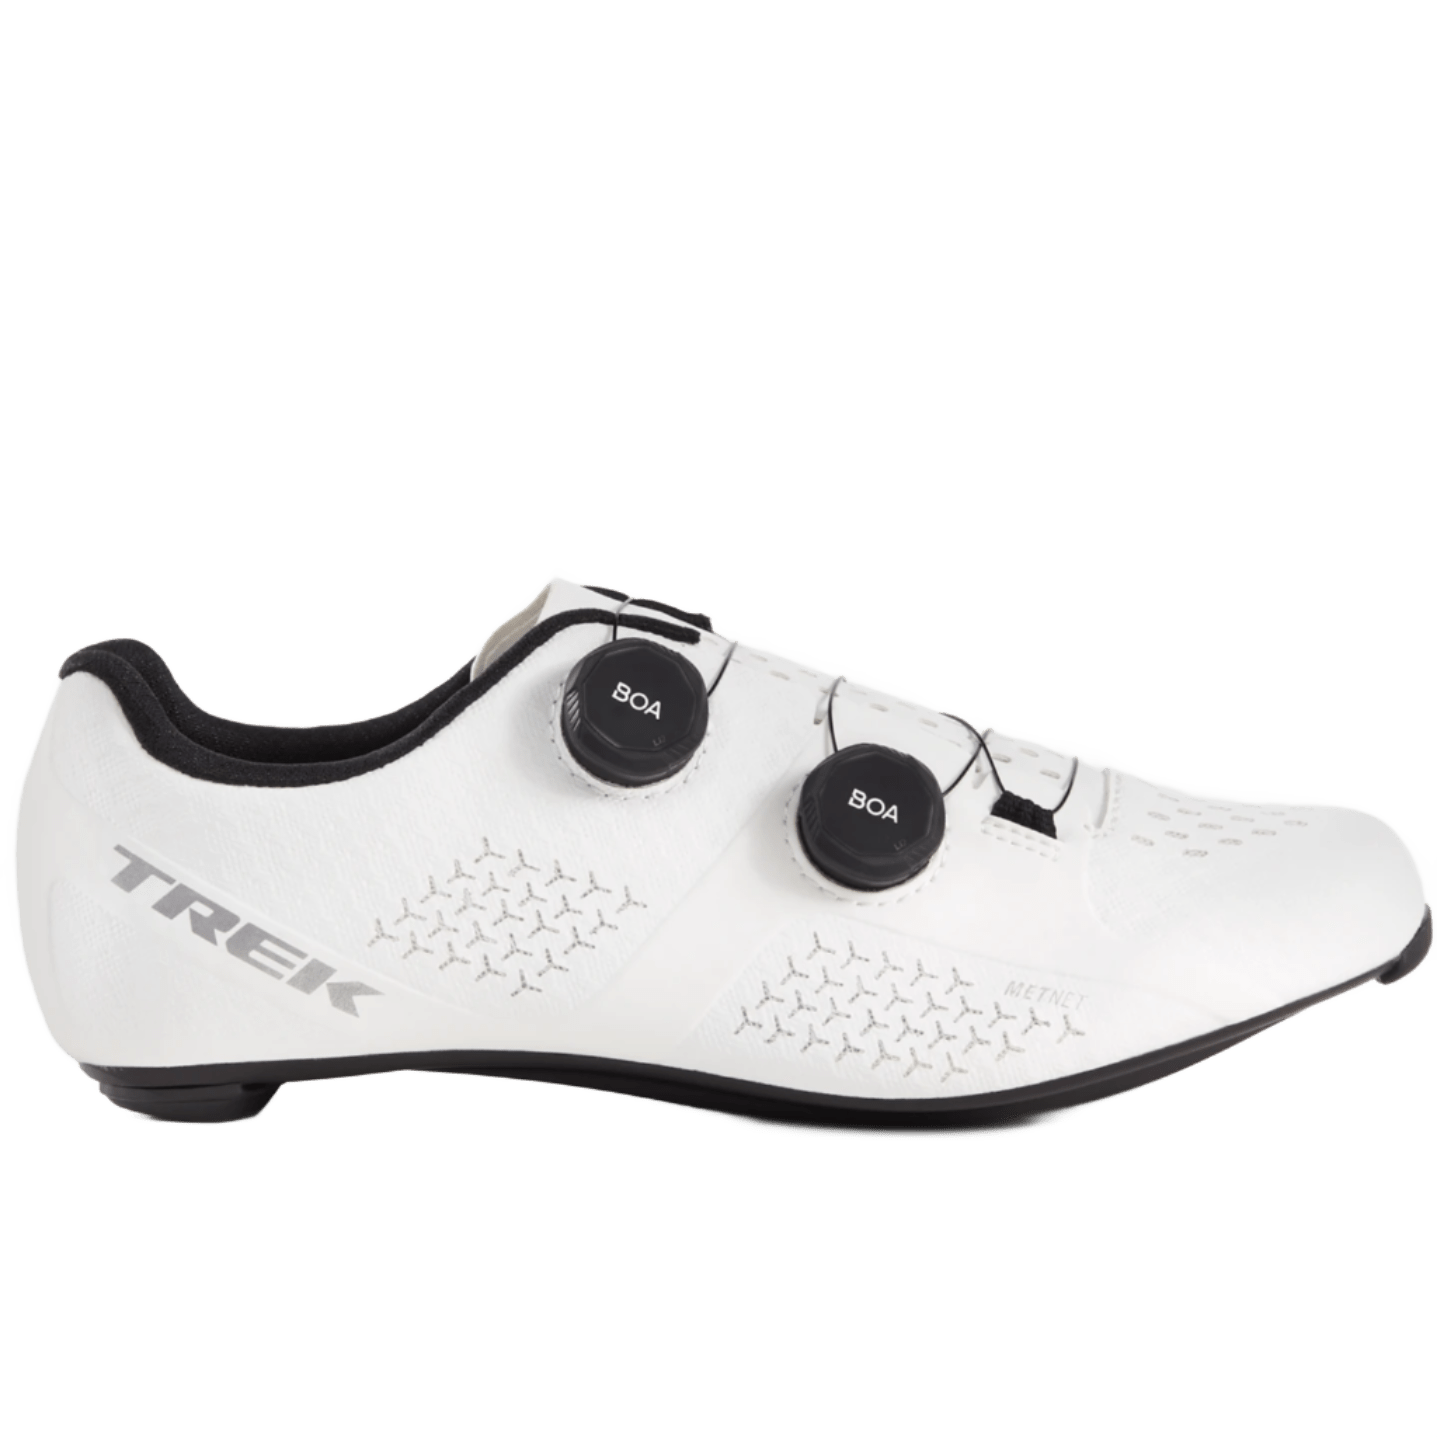 Trek Velocis Road Shoe White / 37 Apparel - Apparel Accessories - Shoes - Road